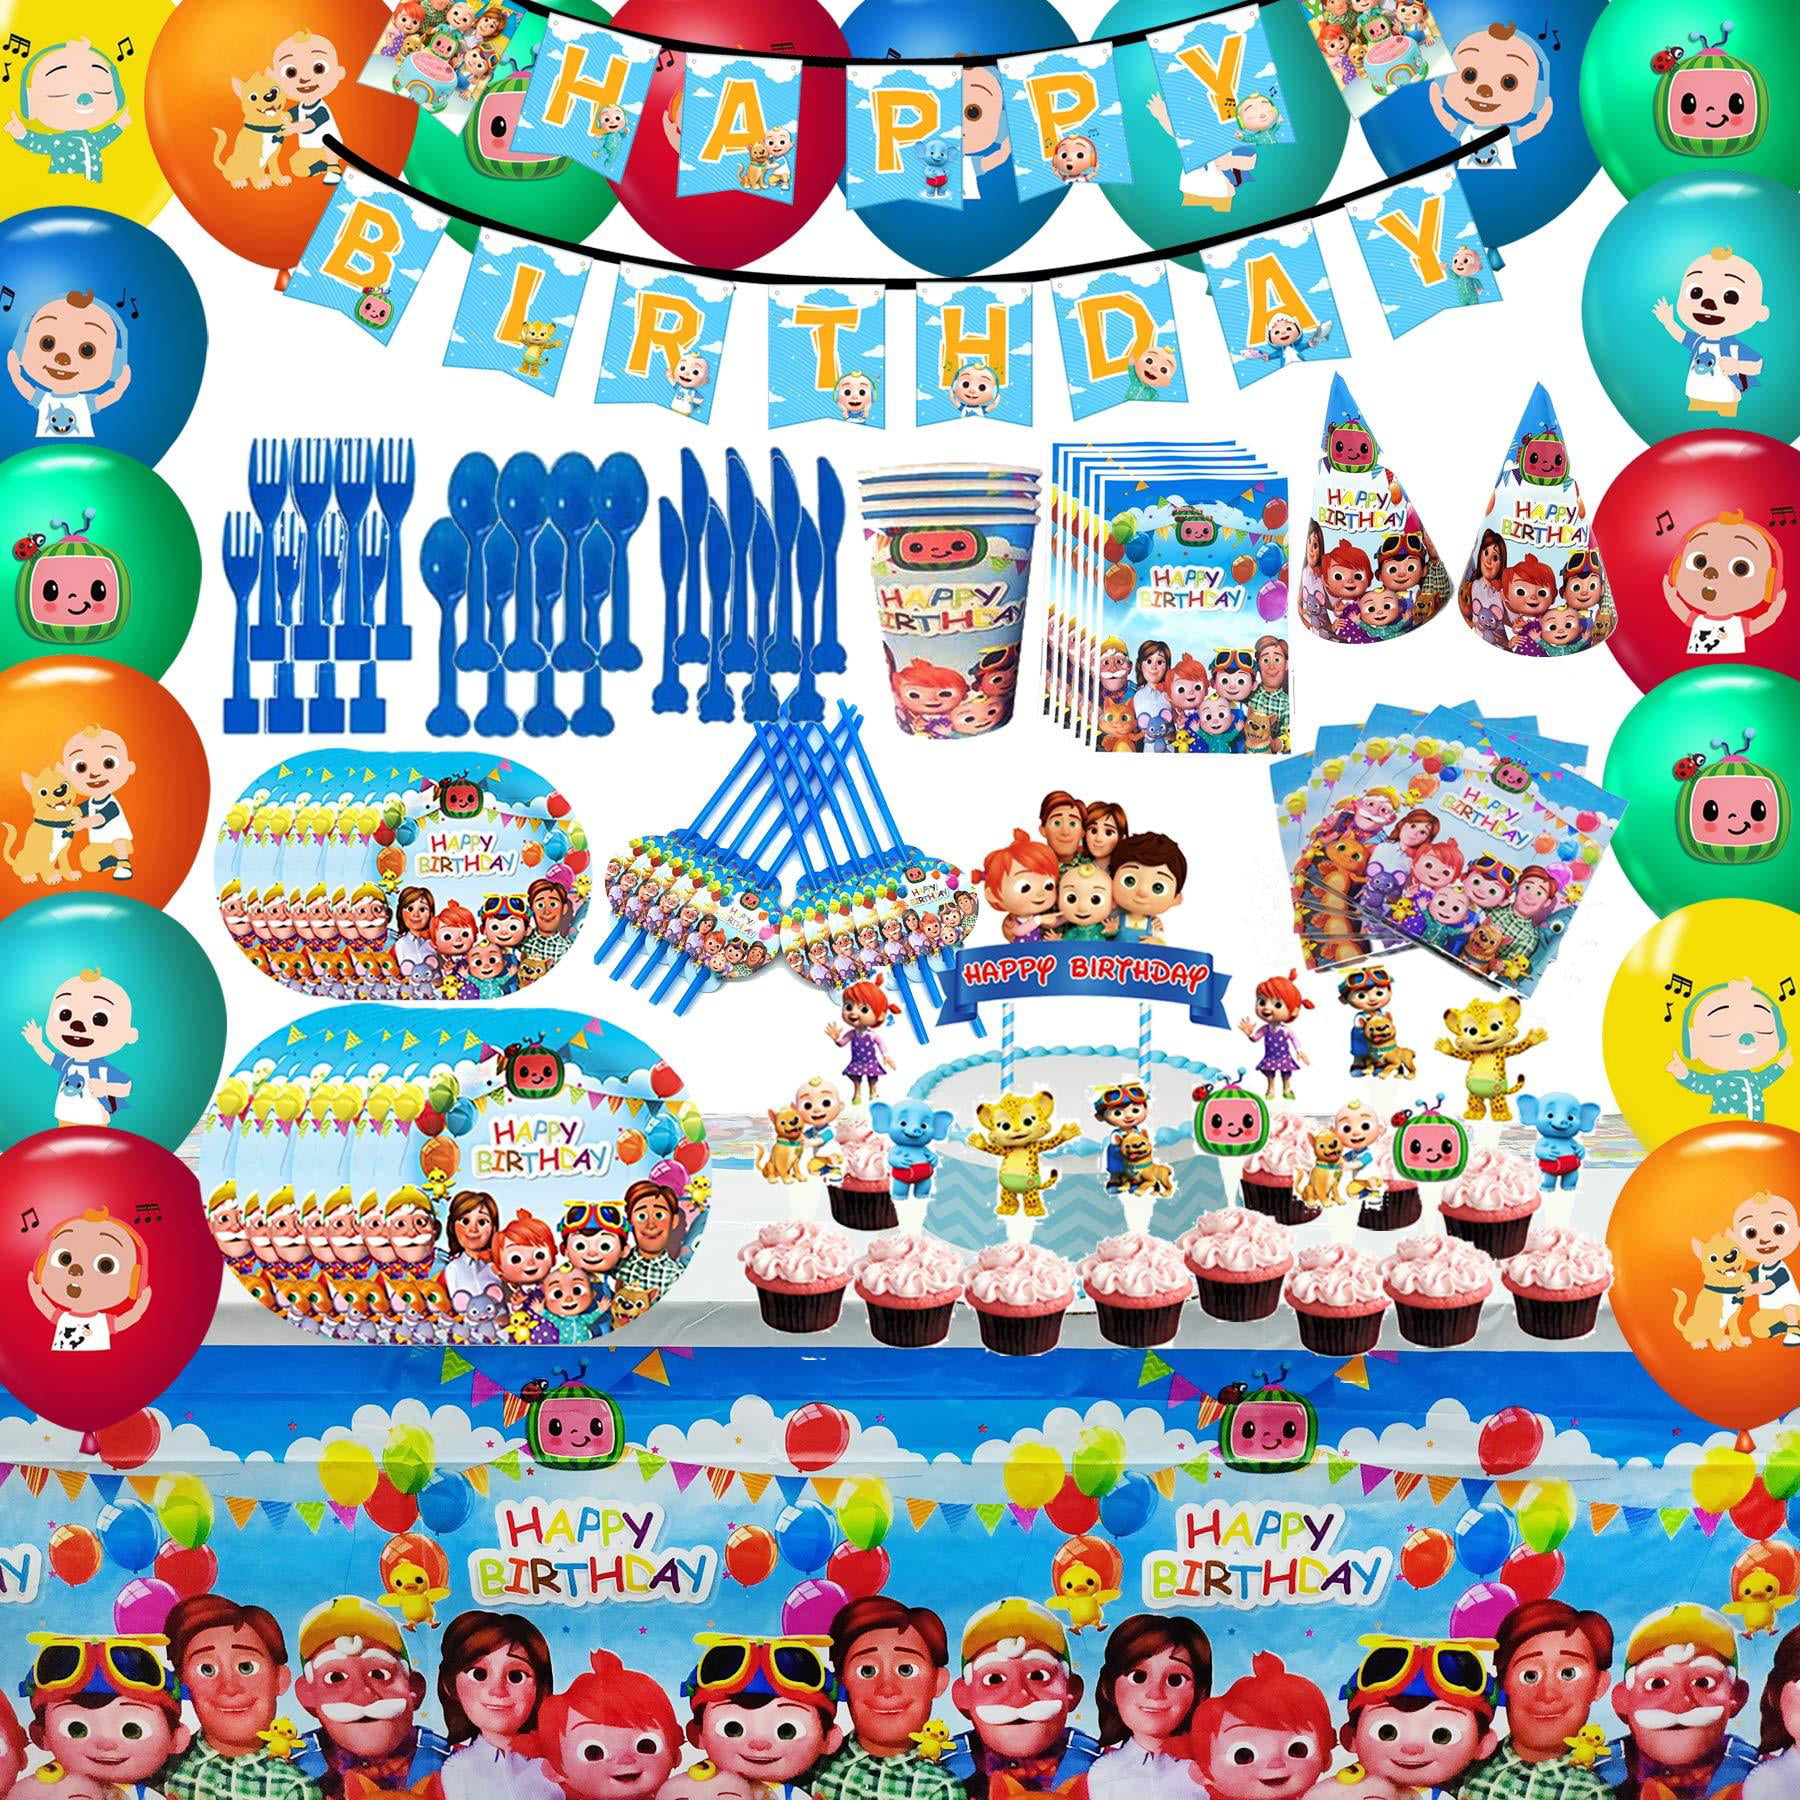 Cocomelons Birthday Party Supplies 30 pcs Coco melon JJ Melon Invitation Cards